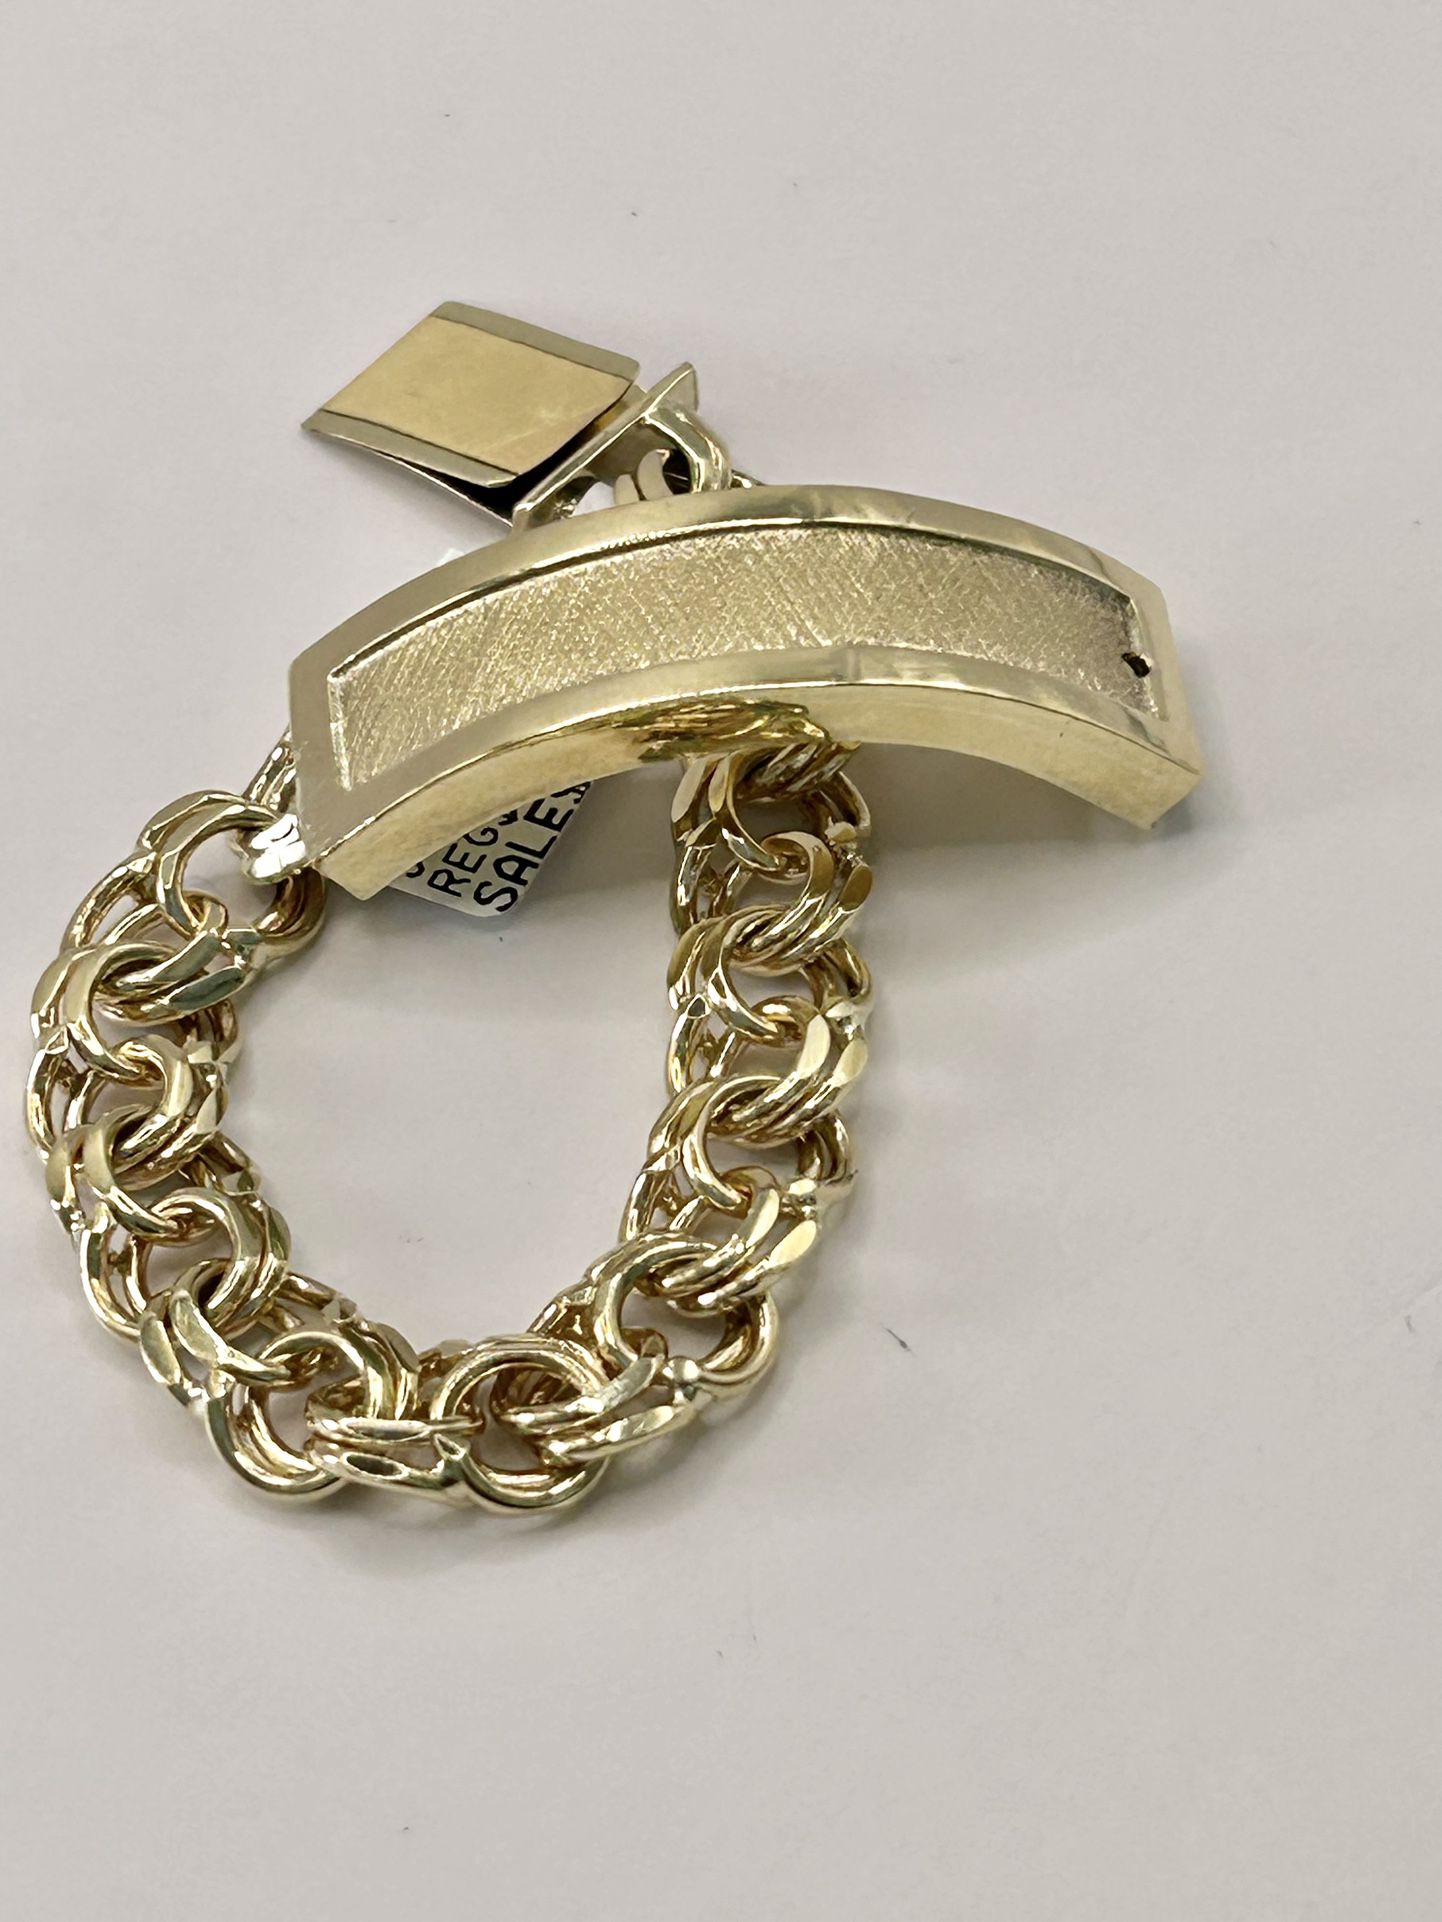 Yaris Chain Link Bracelet – Baby Gold